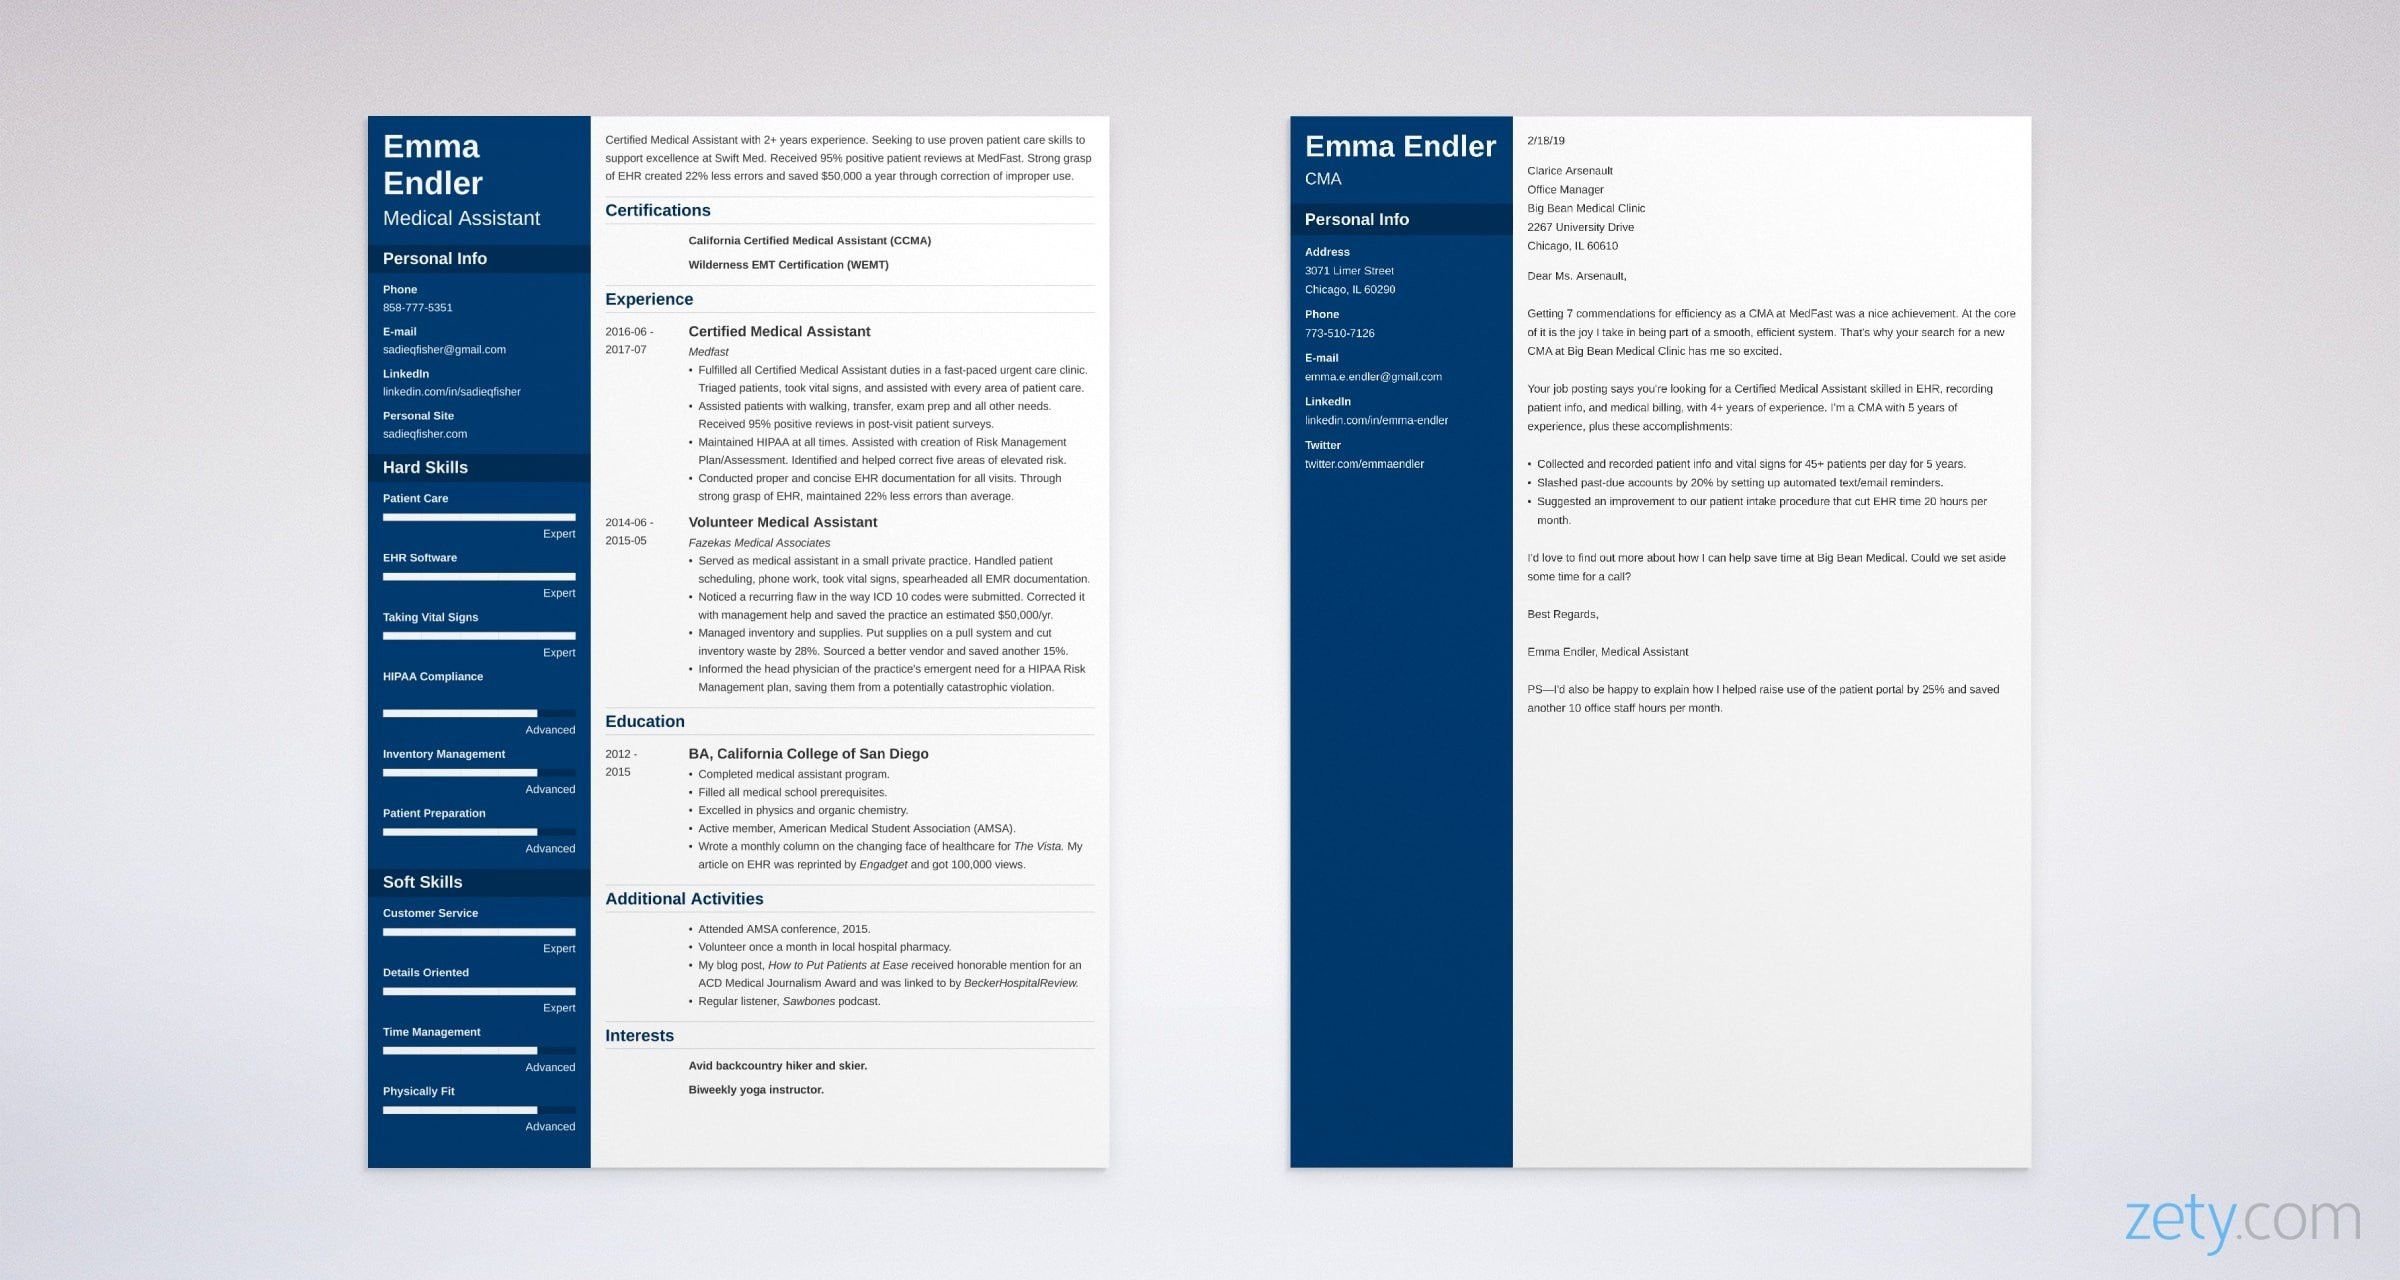 Sample Cover Letter for Resume Example 5 Short Cover Letter Examples for Any Job (lancarrezekiq Writing Guide)